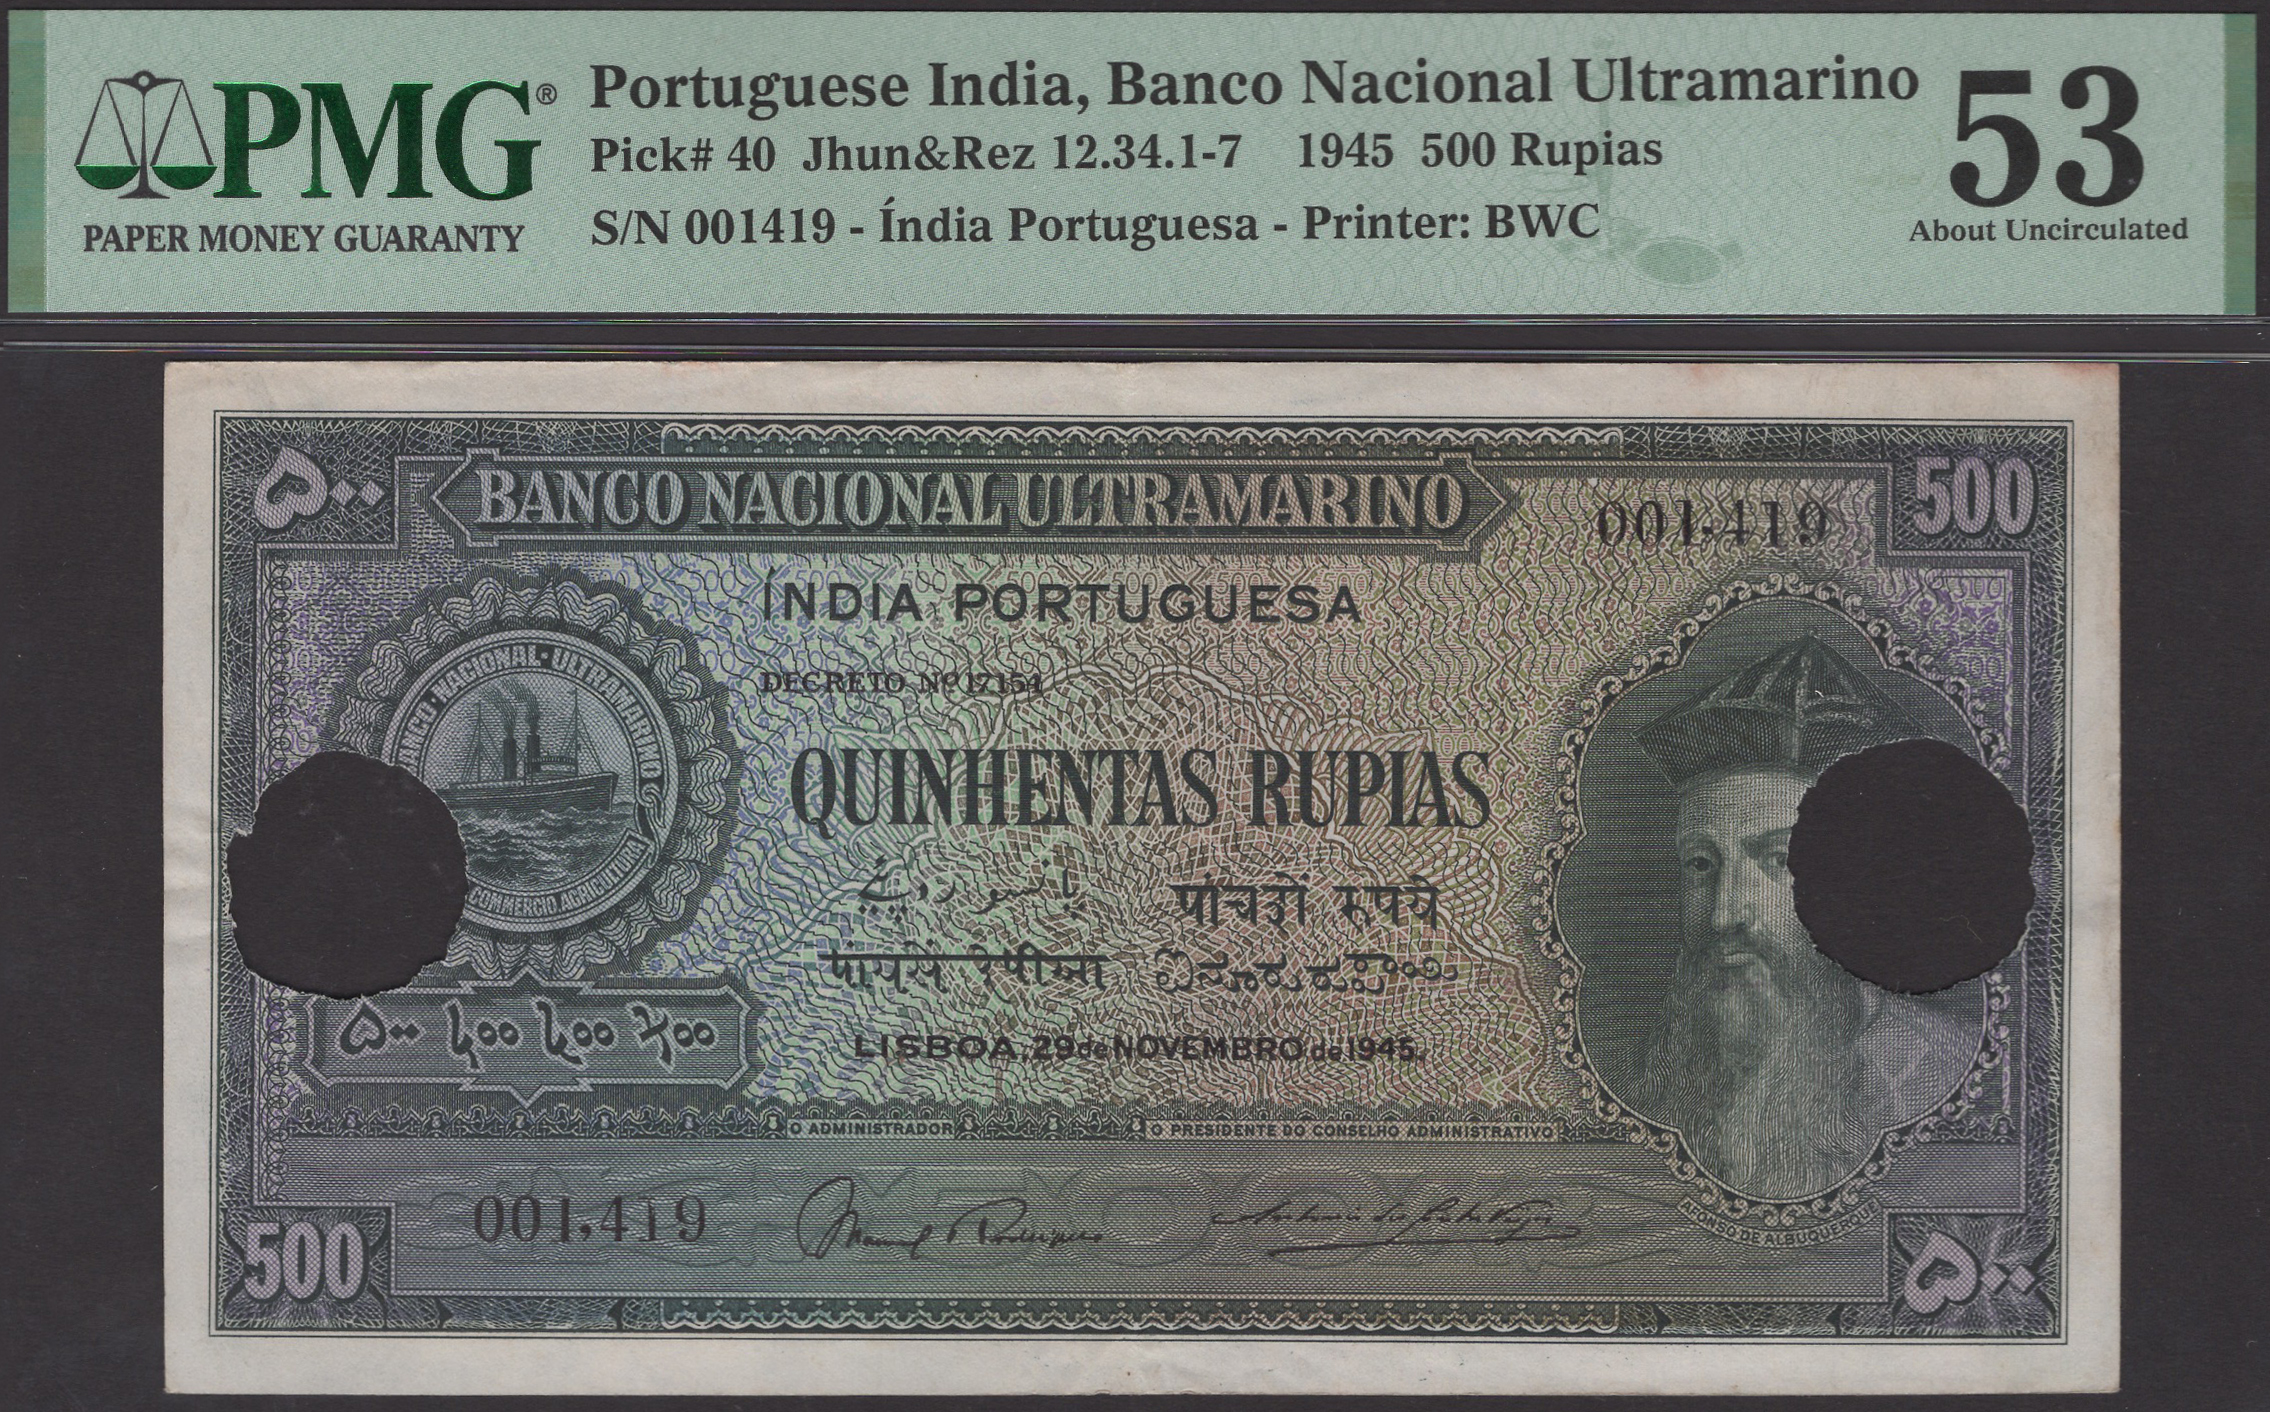 Banco Nacional Ultramarino, Portuguese India, 500 Rupias, 29 November 1945, serial number...